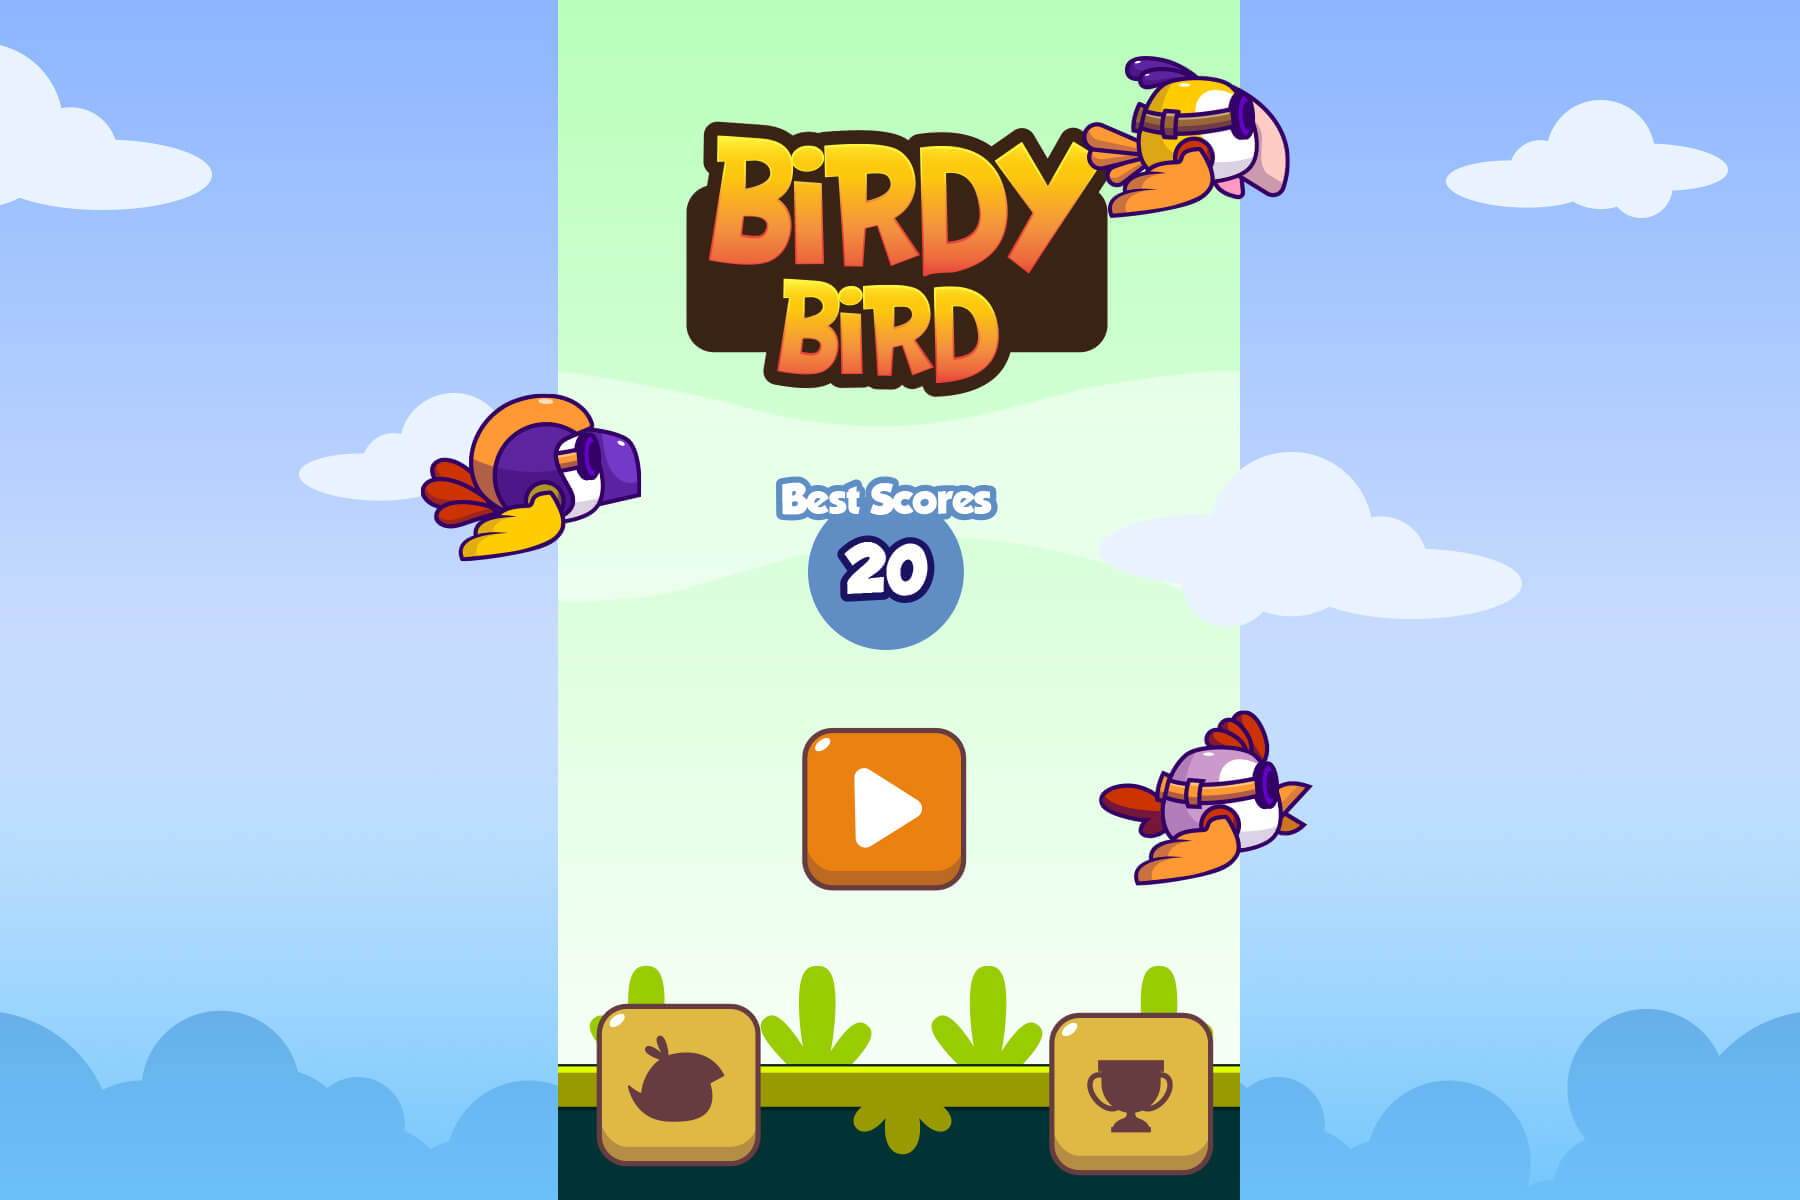 Birdy Bird Game Assets Download Pack 